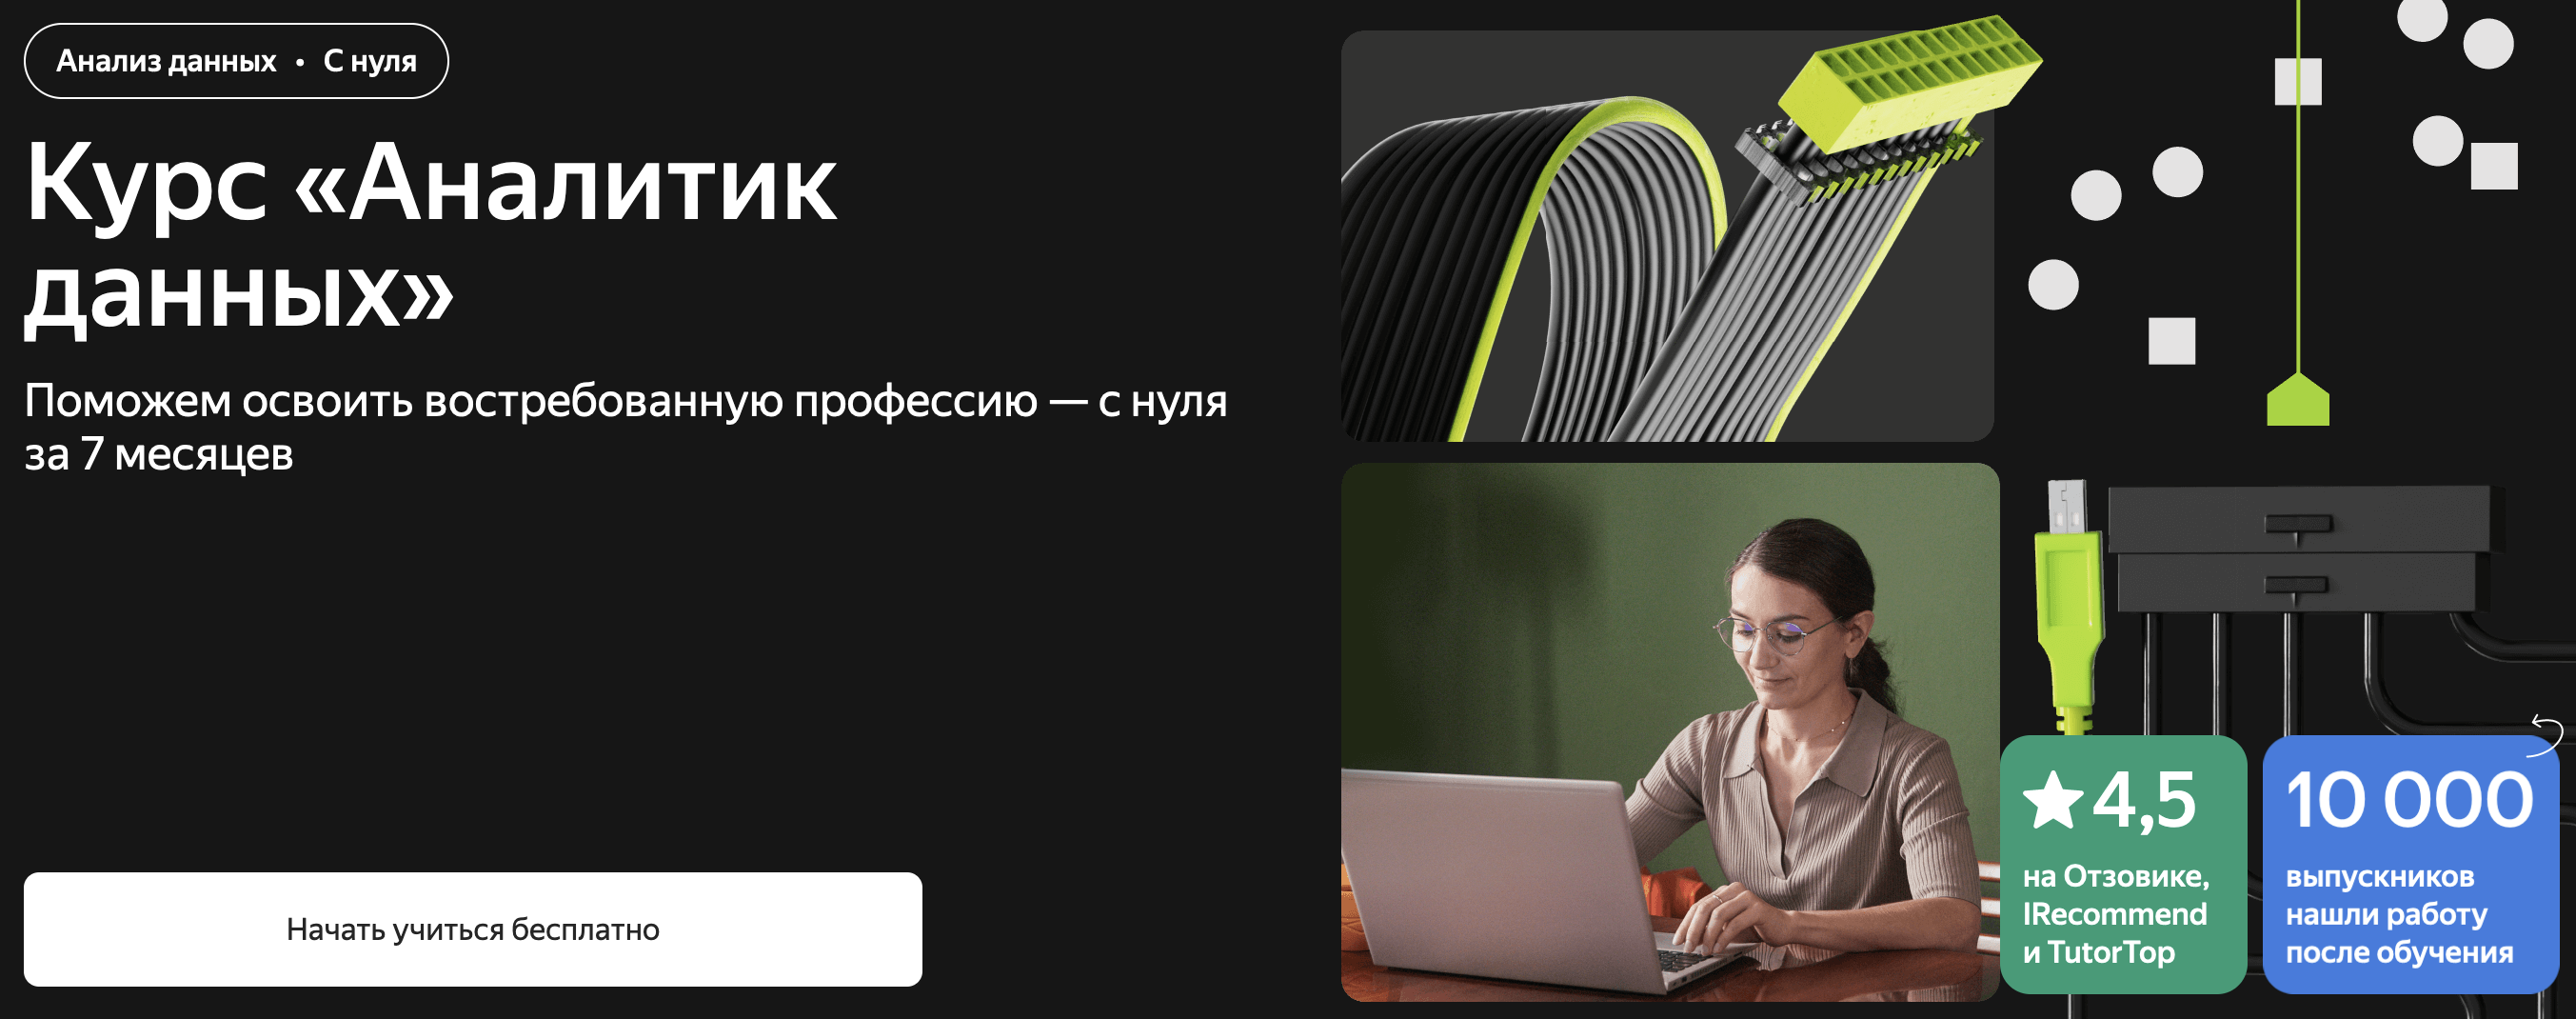 Яндекс Практикум: Аналитик данных